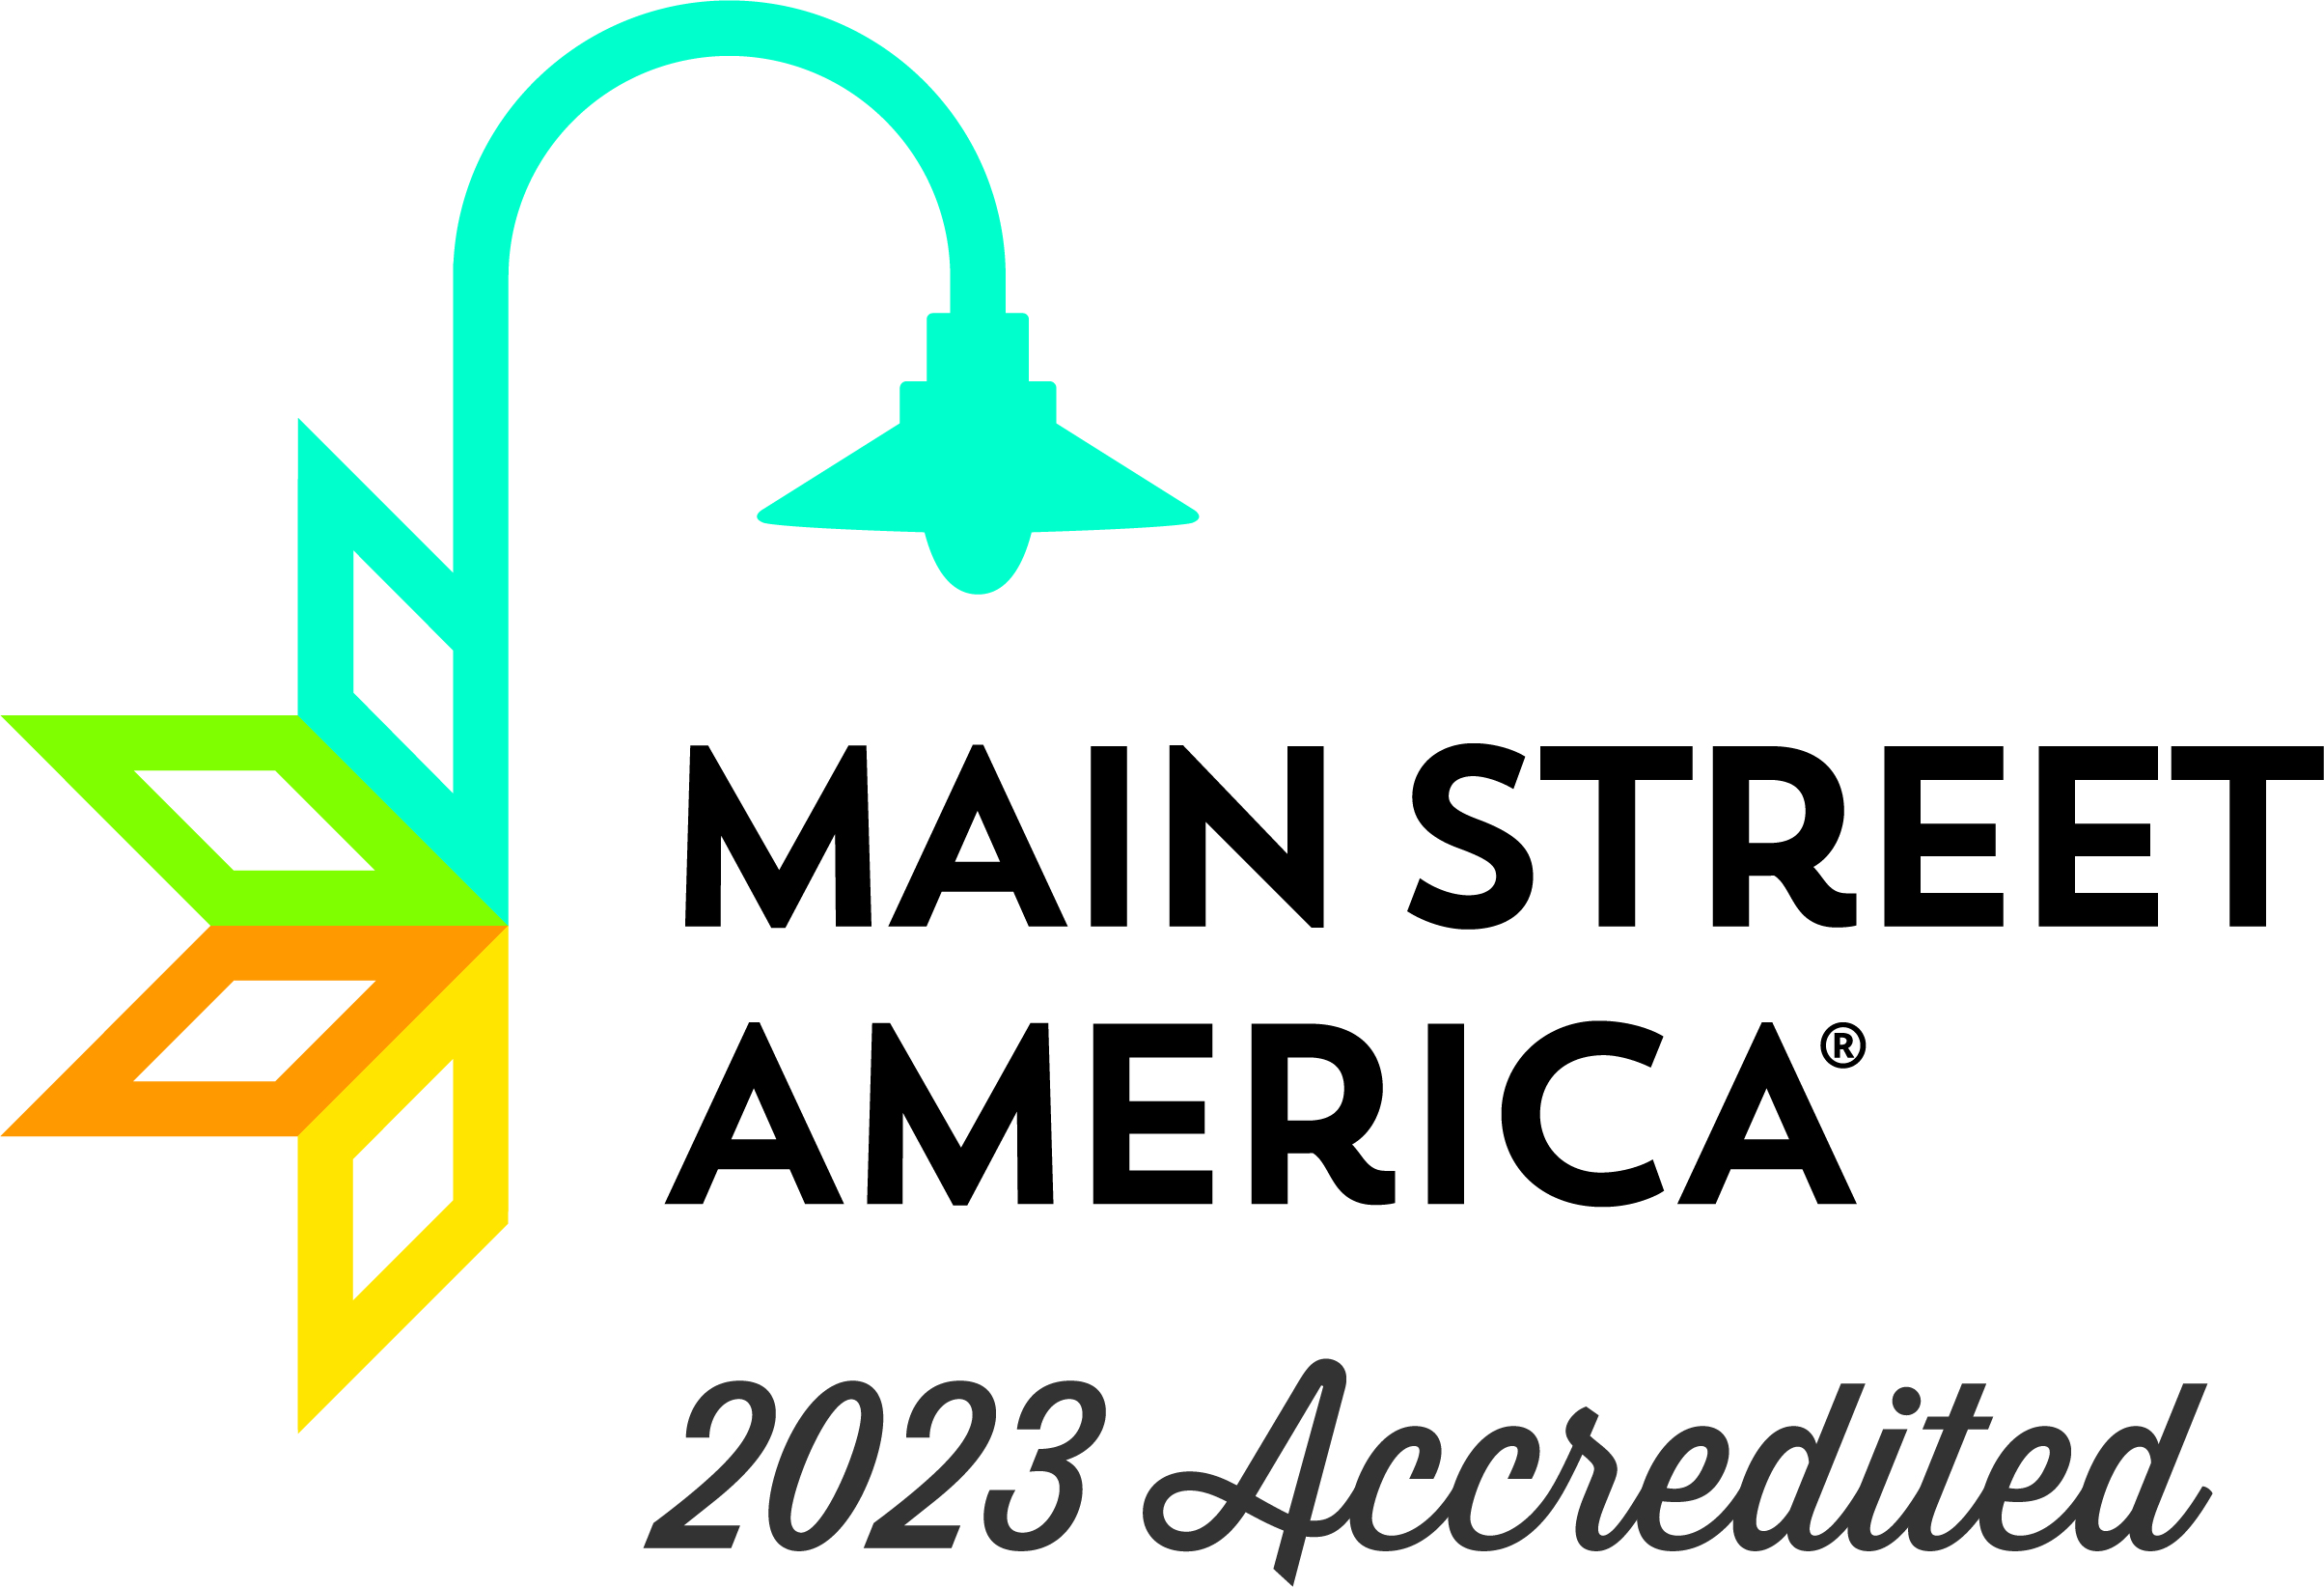 Main Street America Accredited logo 2023